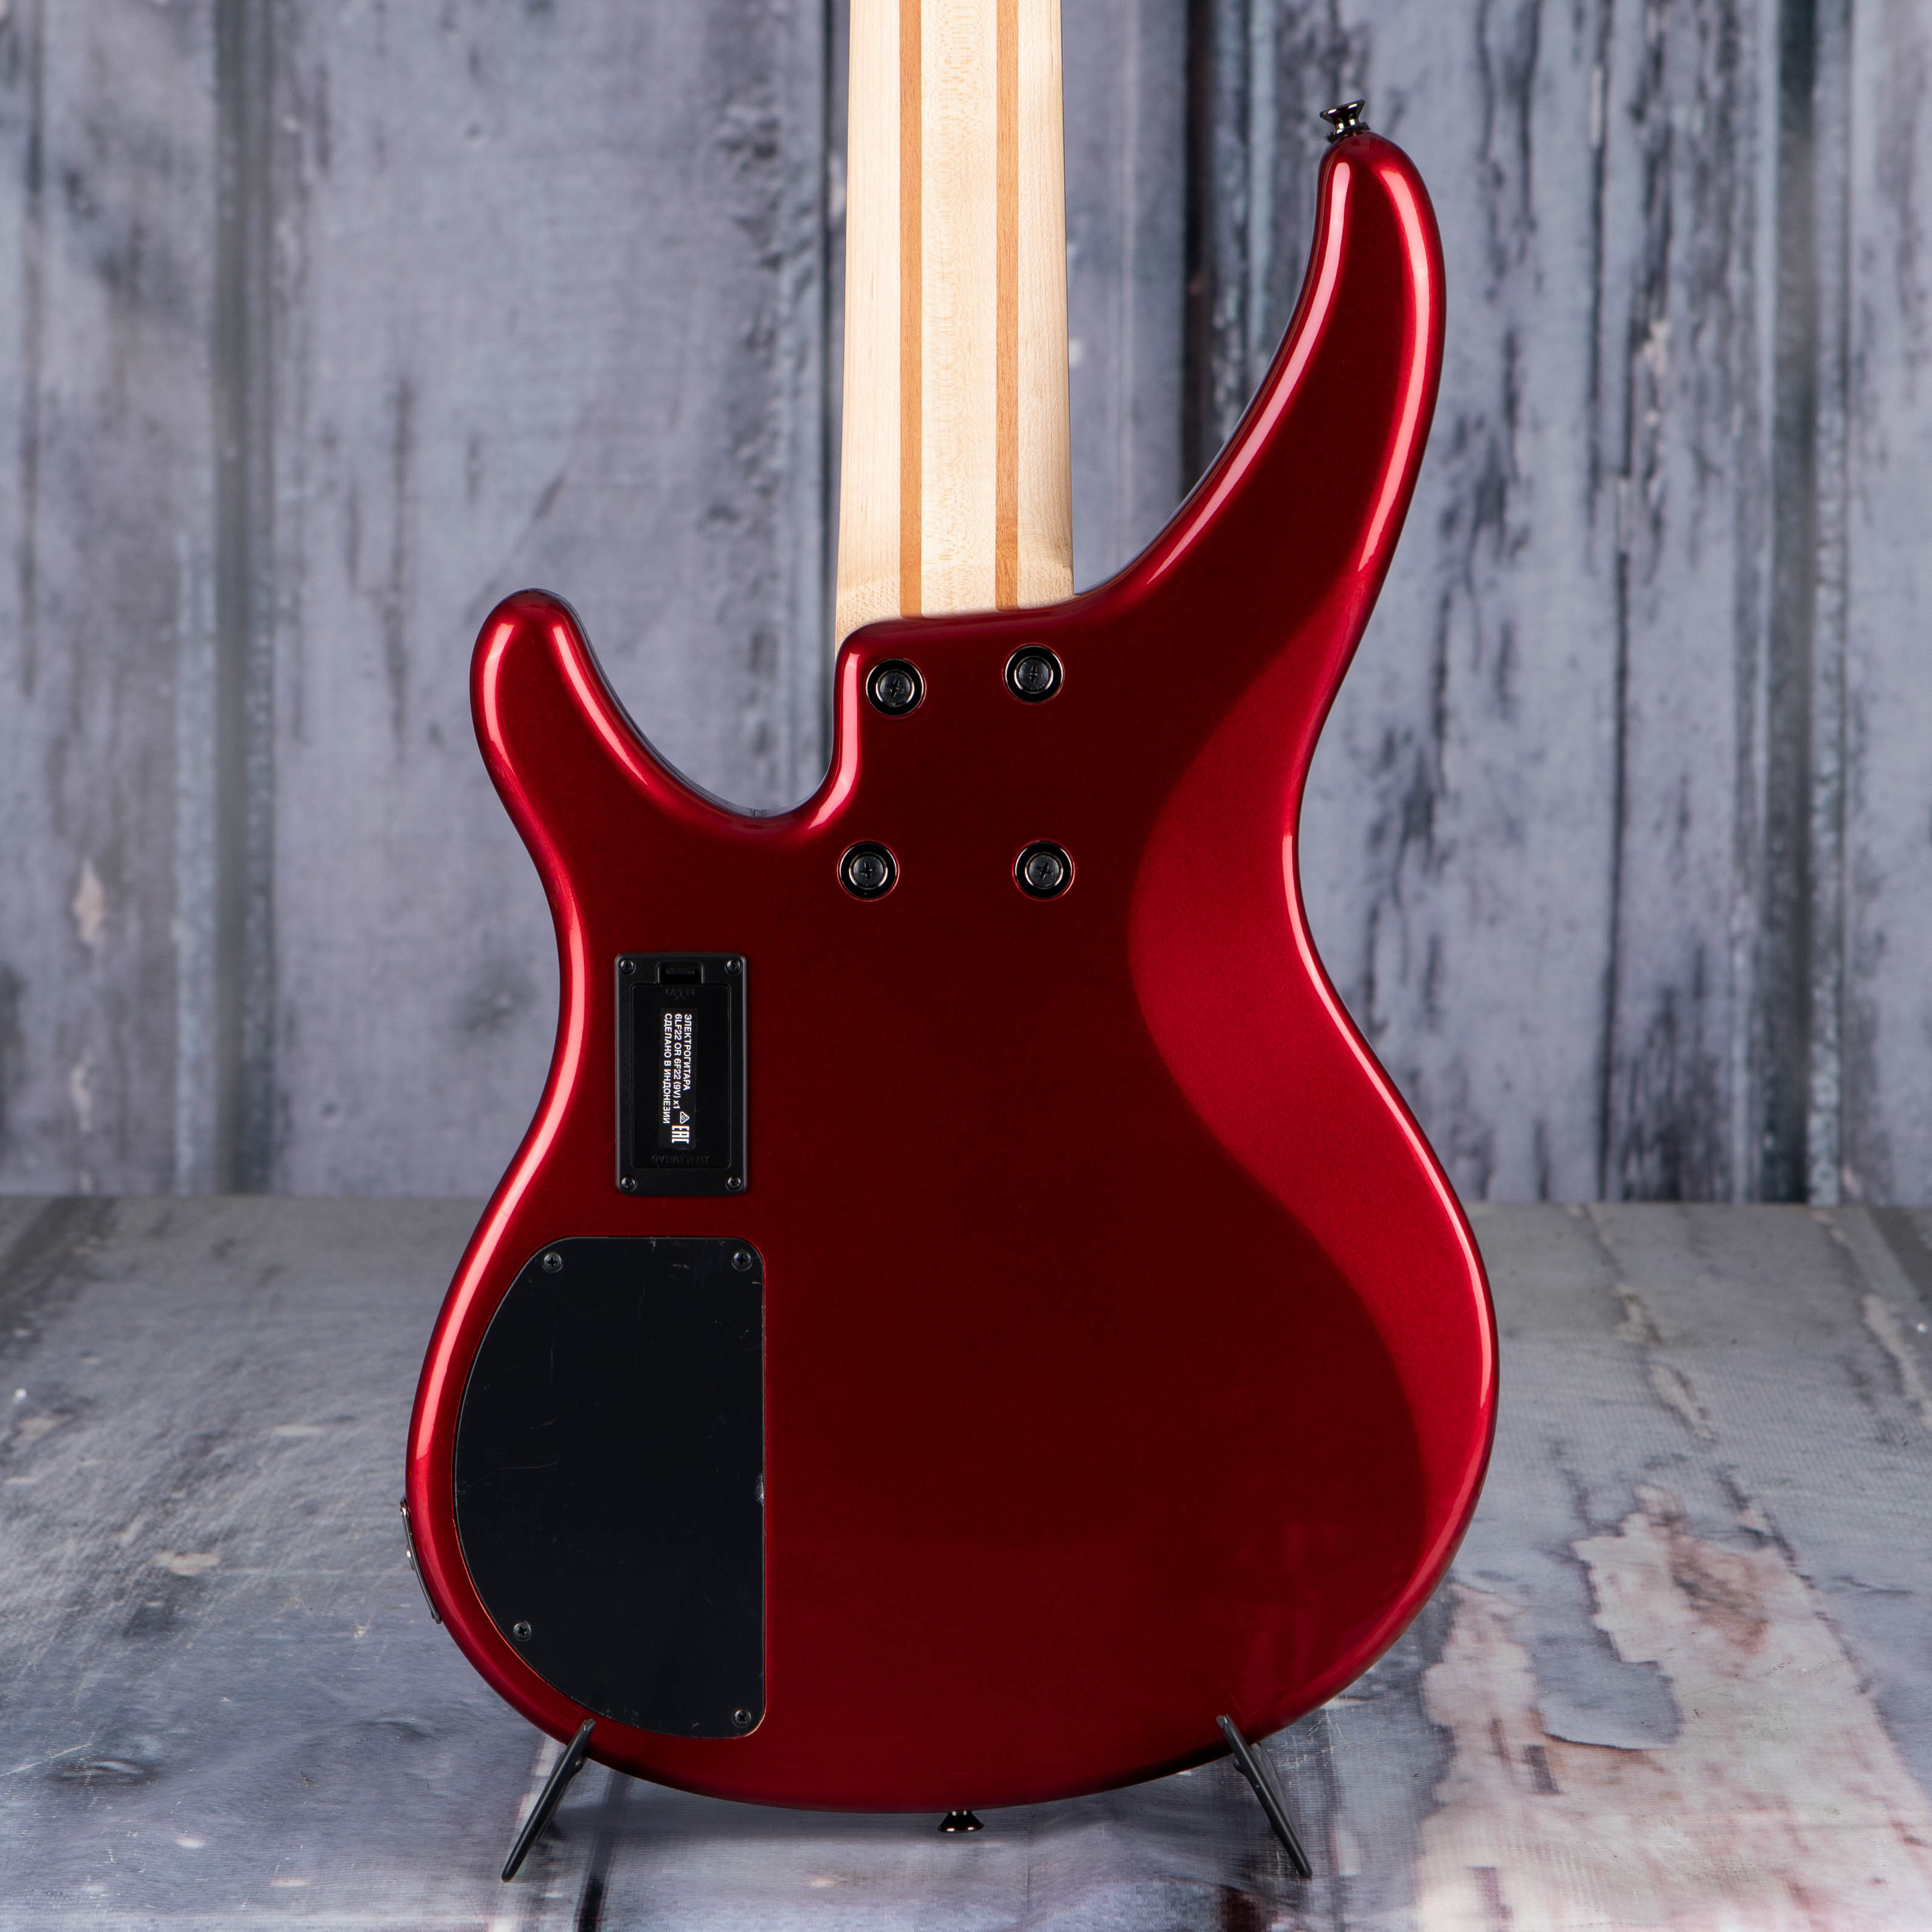 Yamaha TRBX305 5-String Electric Bass Guitar, Candy Apple Red, back closeup